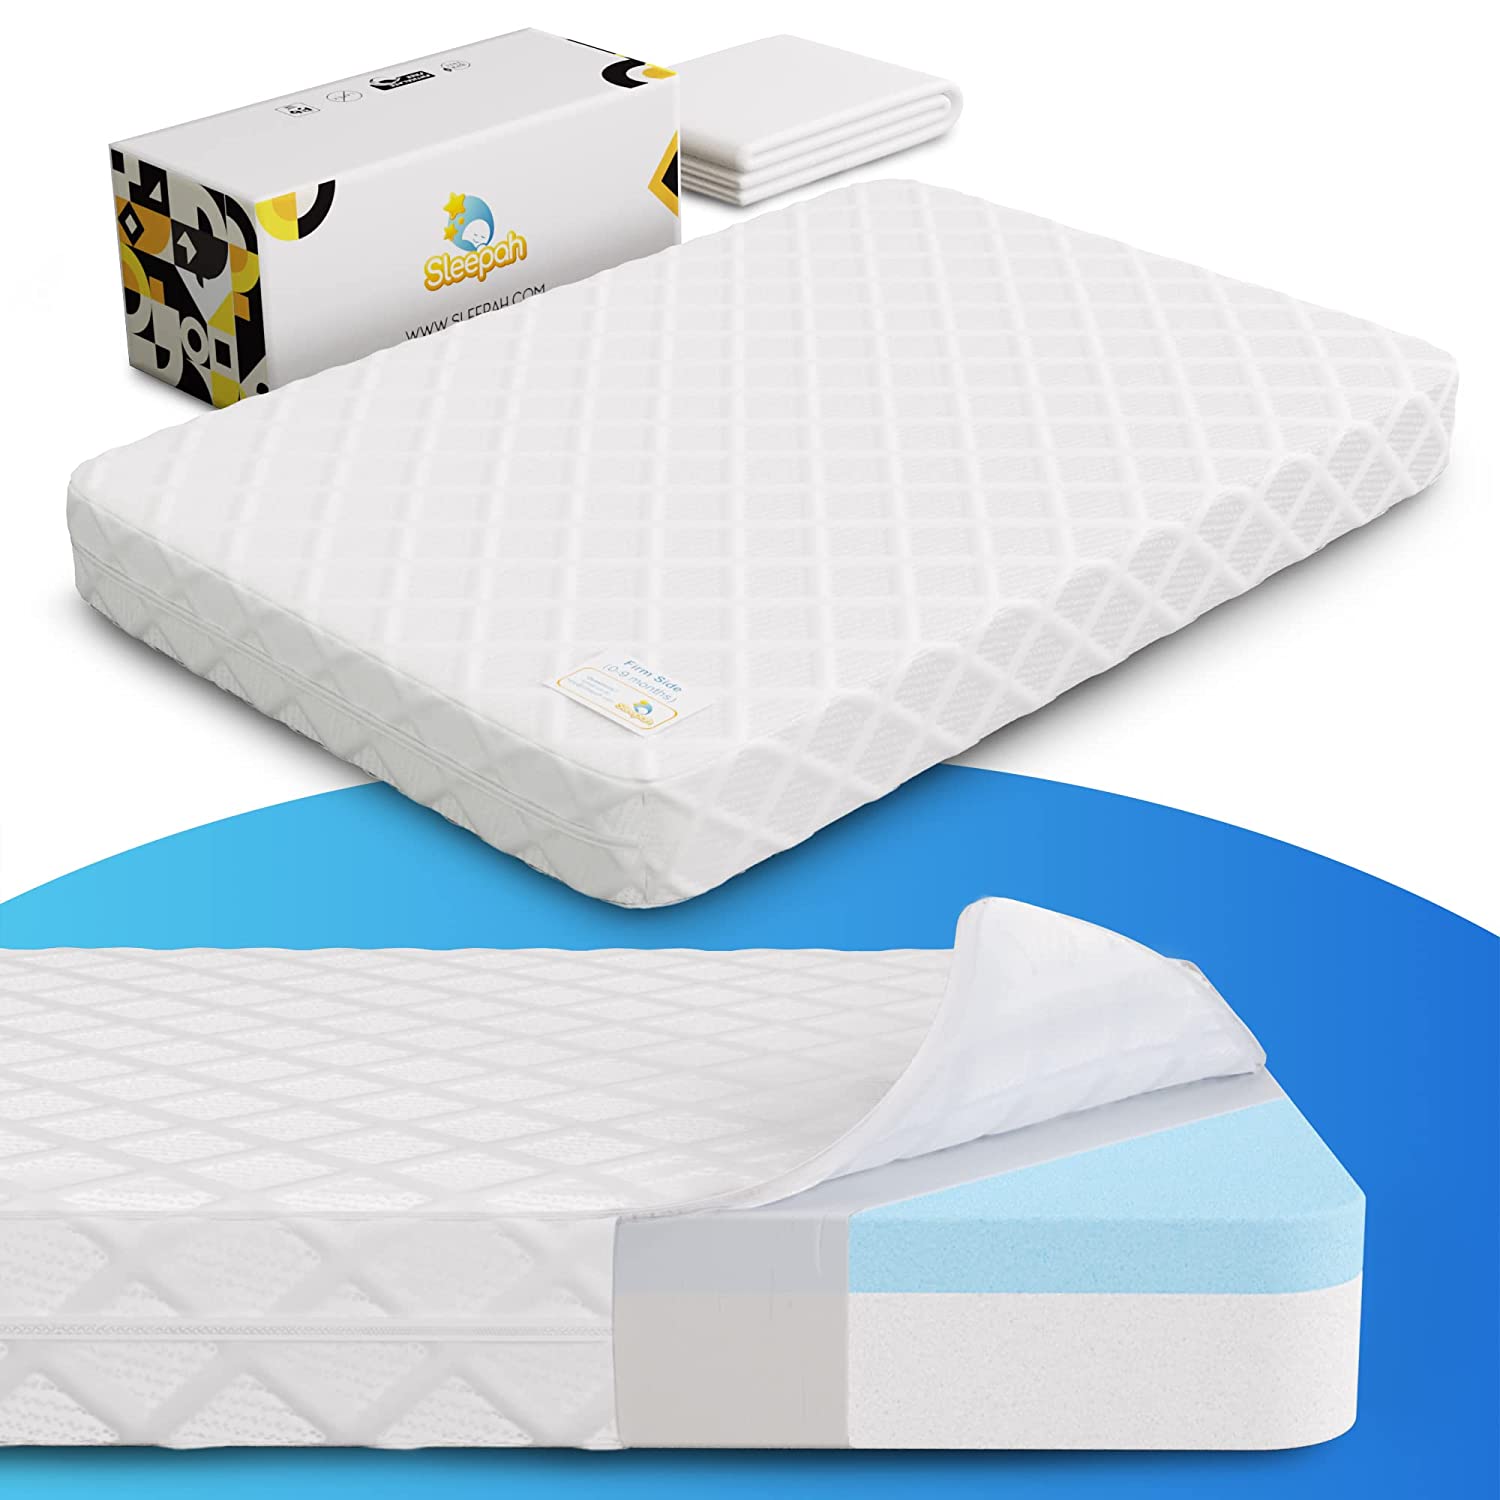 Sleepah Double-Sided Memory Foam Mattress For Pack N’ Play